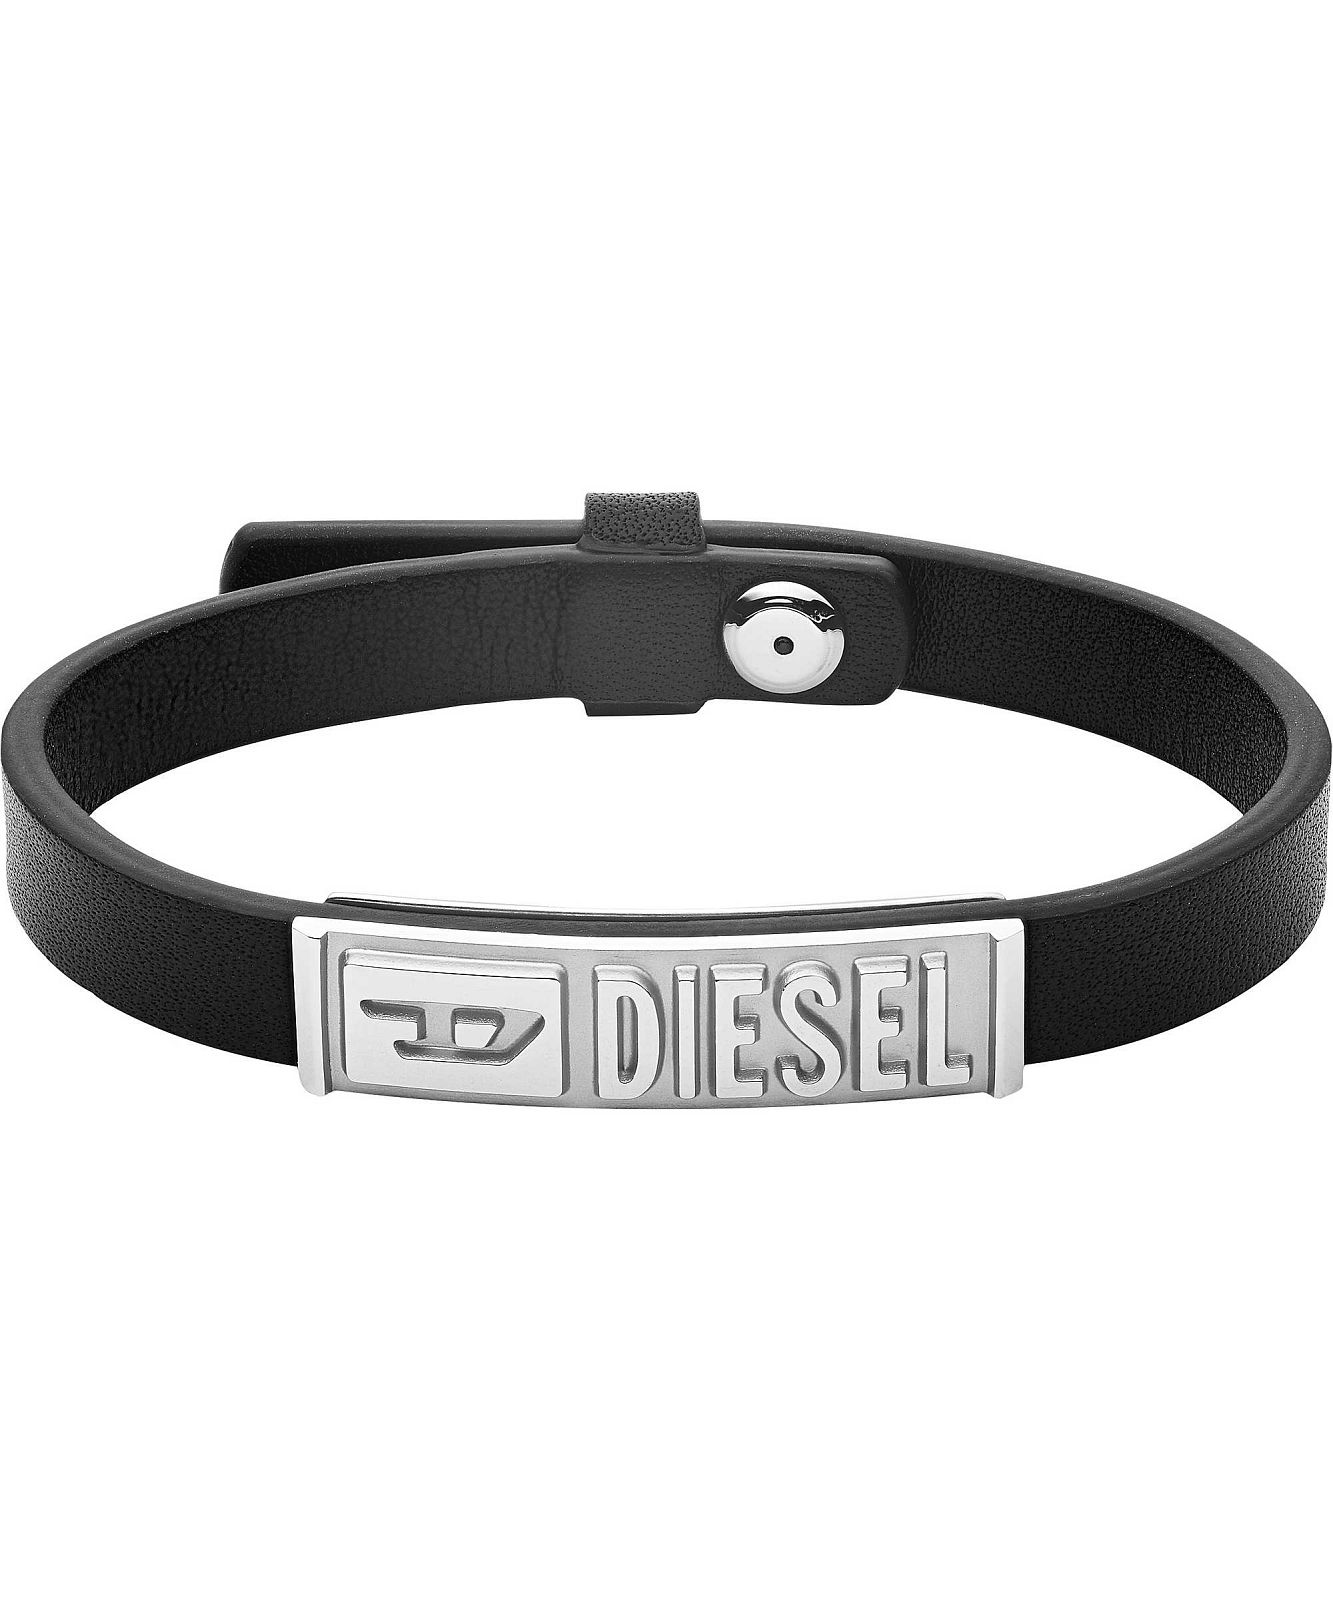 Diesel DX1226040 - Bransoleta Leather • Zegarownia.pl